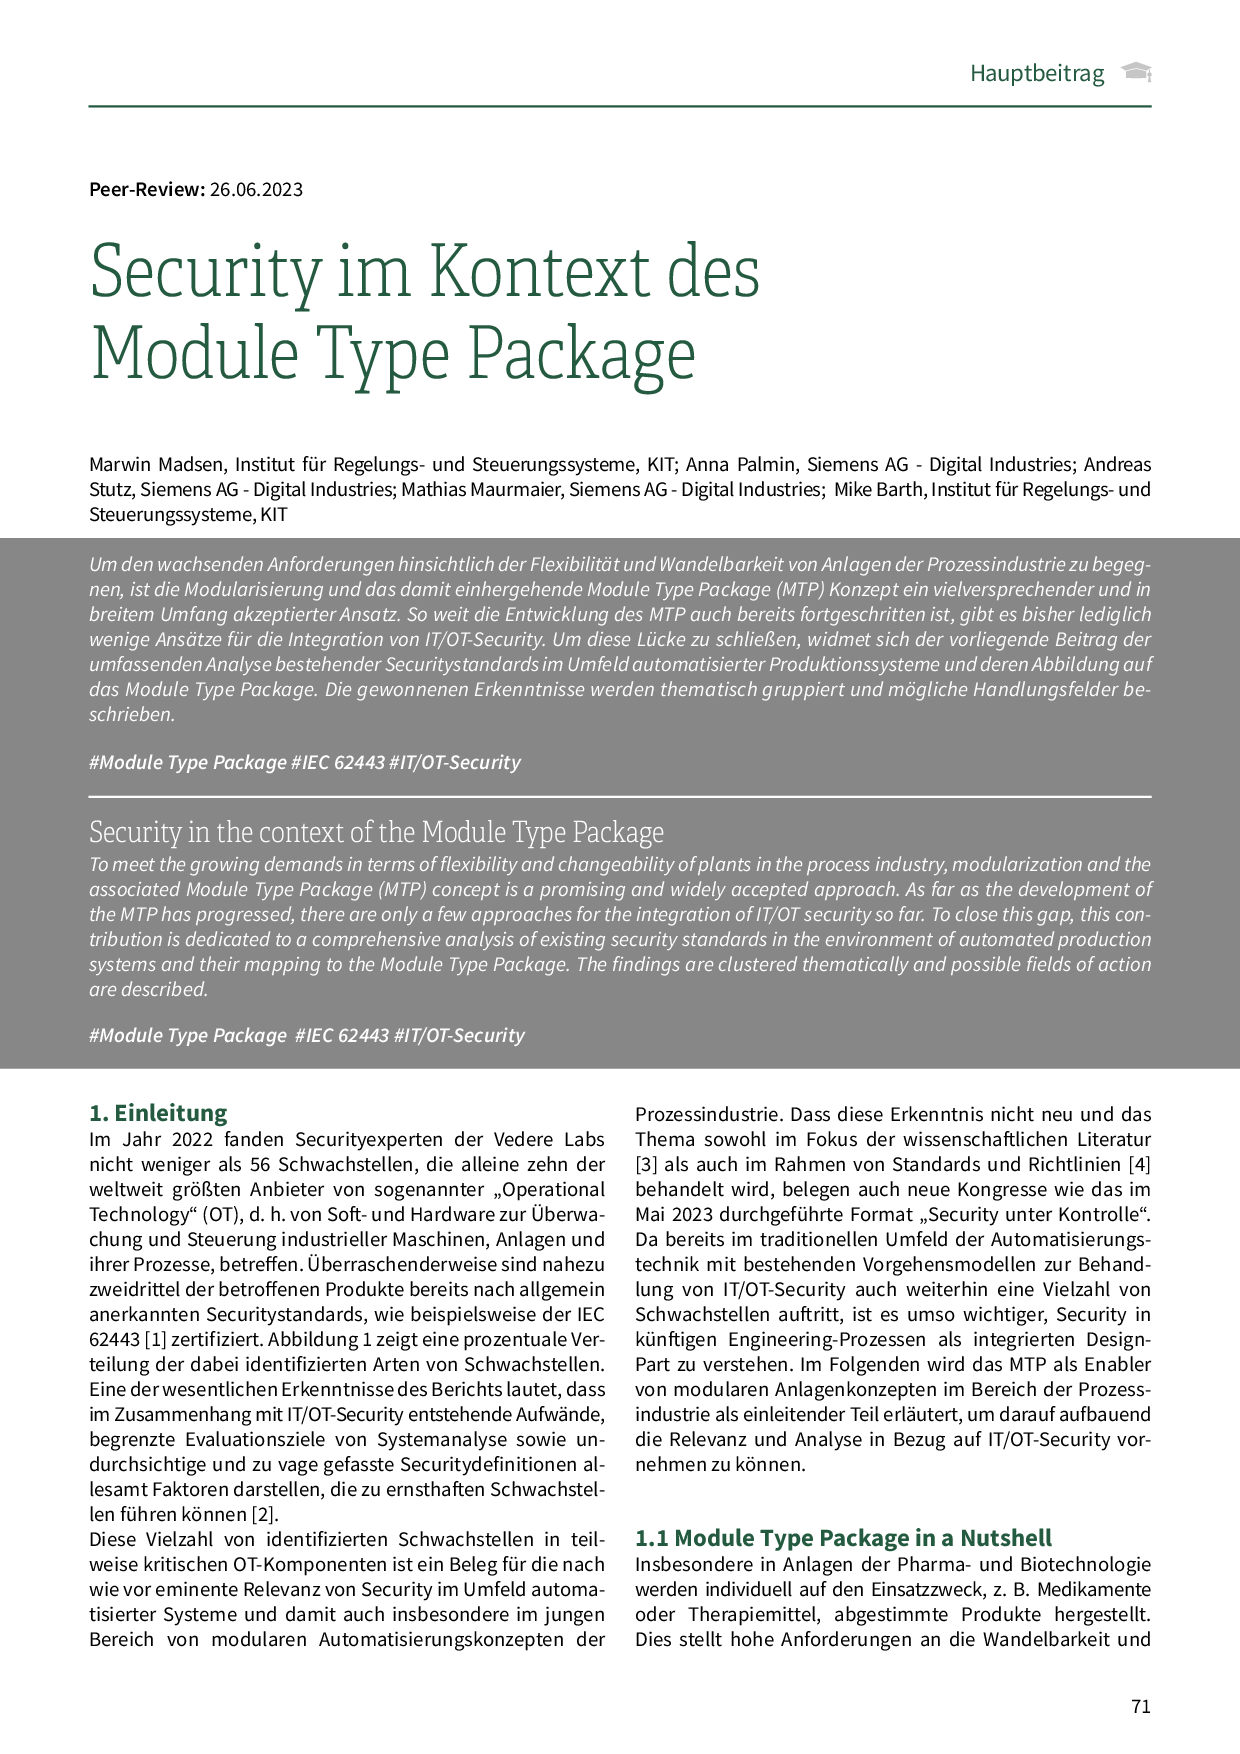 Security im Kontext des Module Type Package